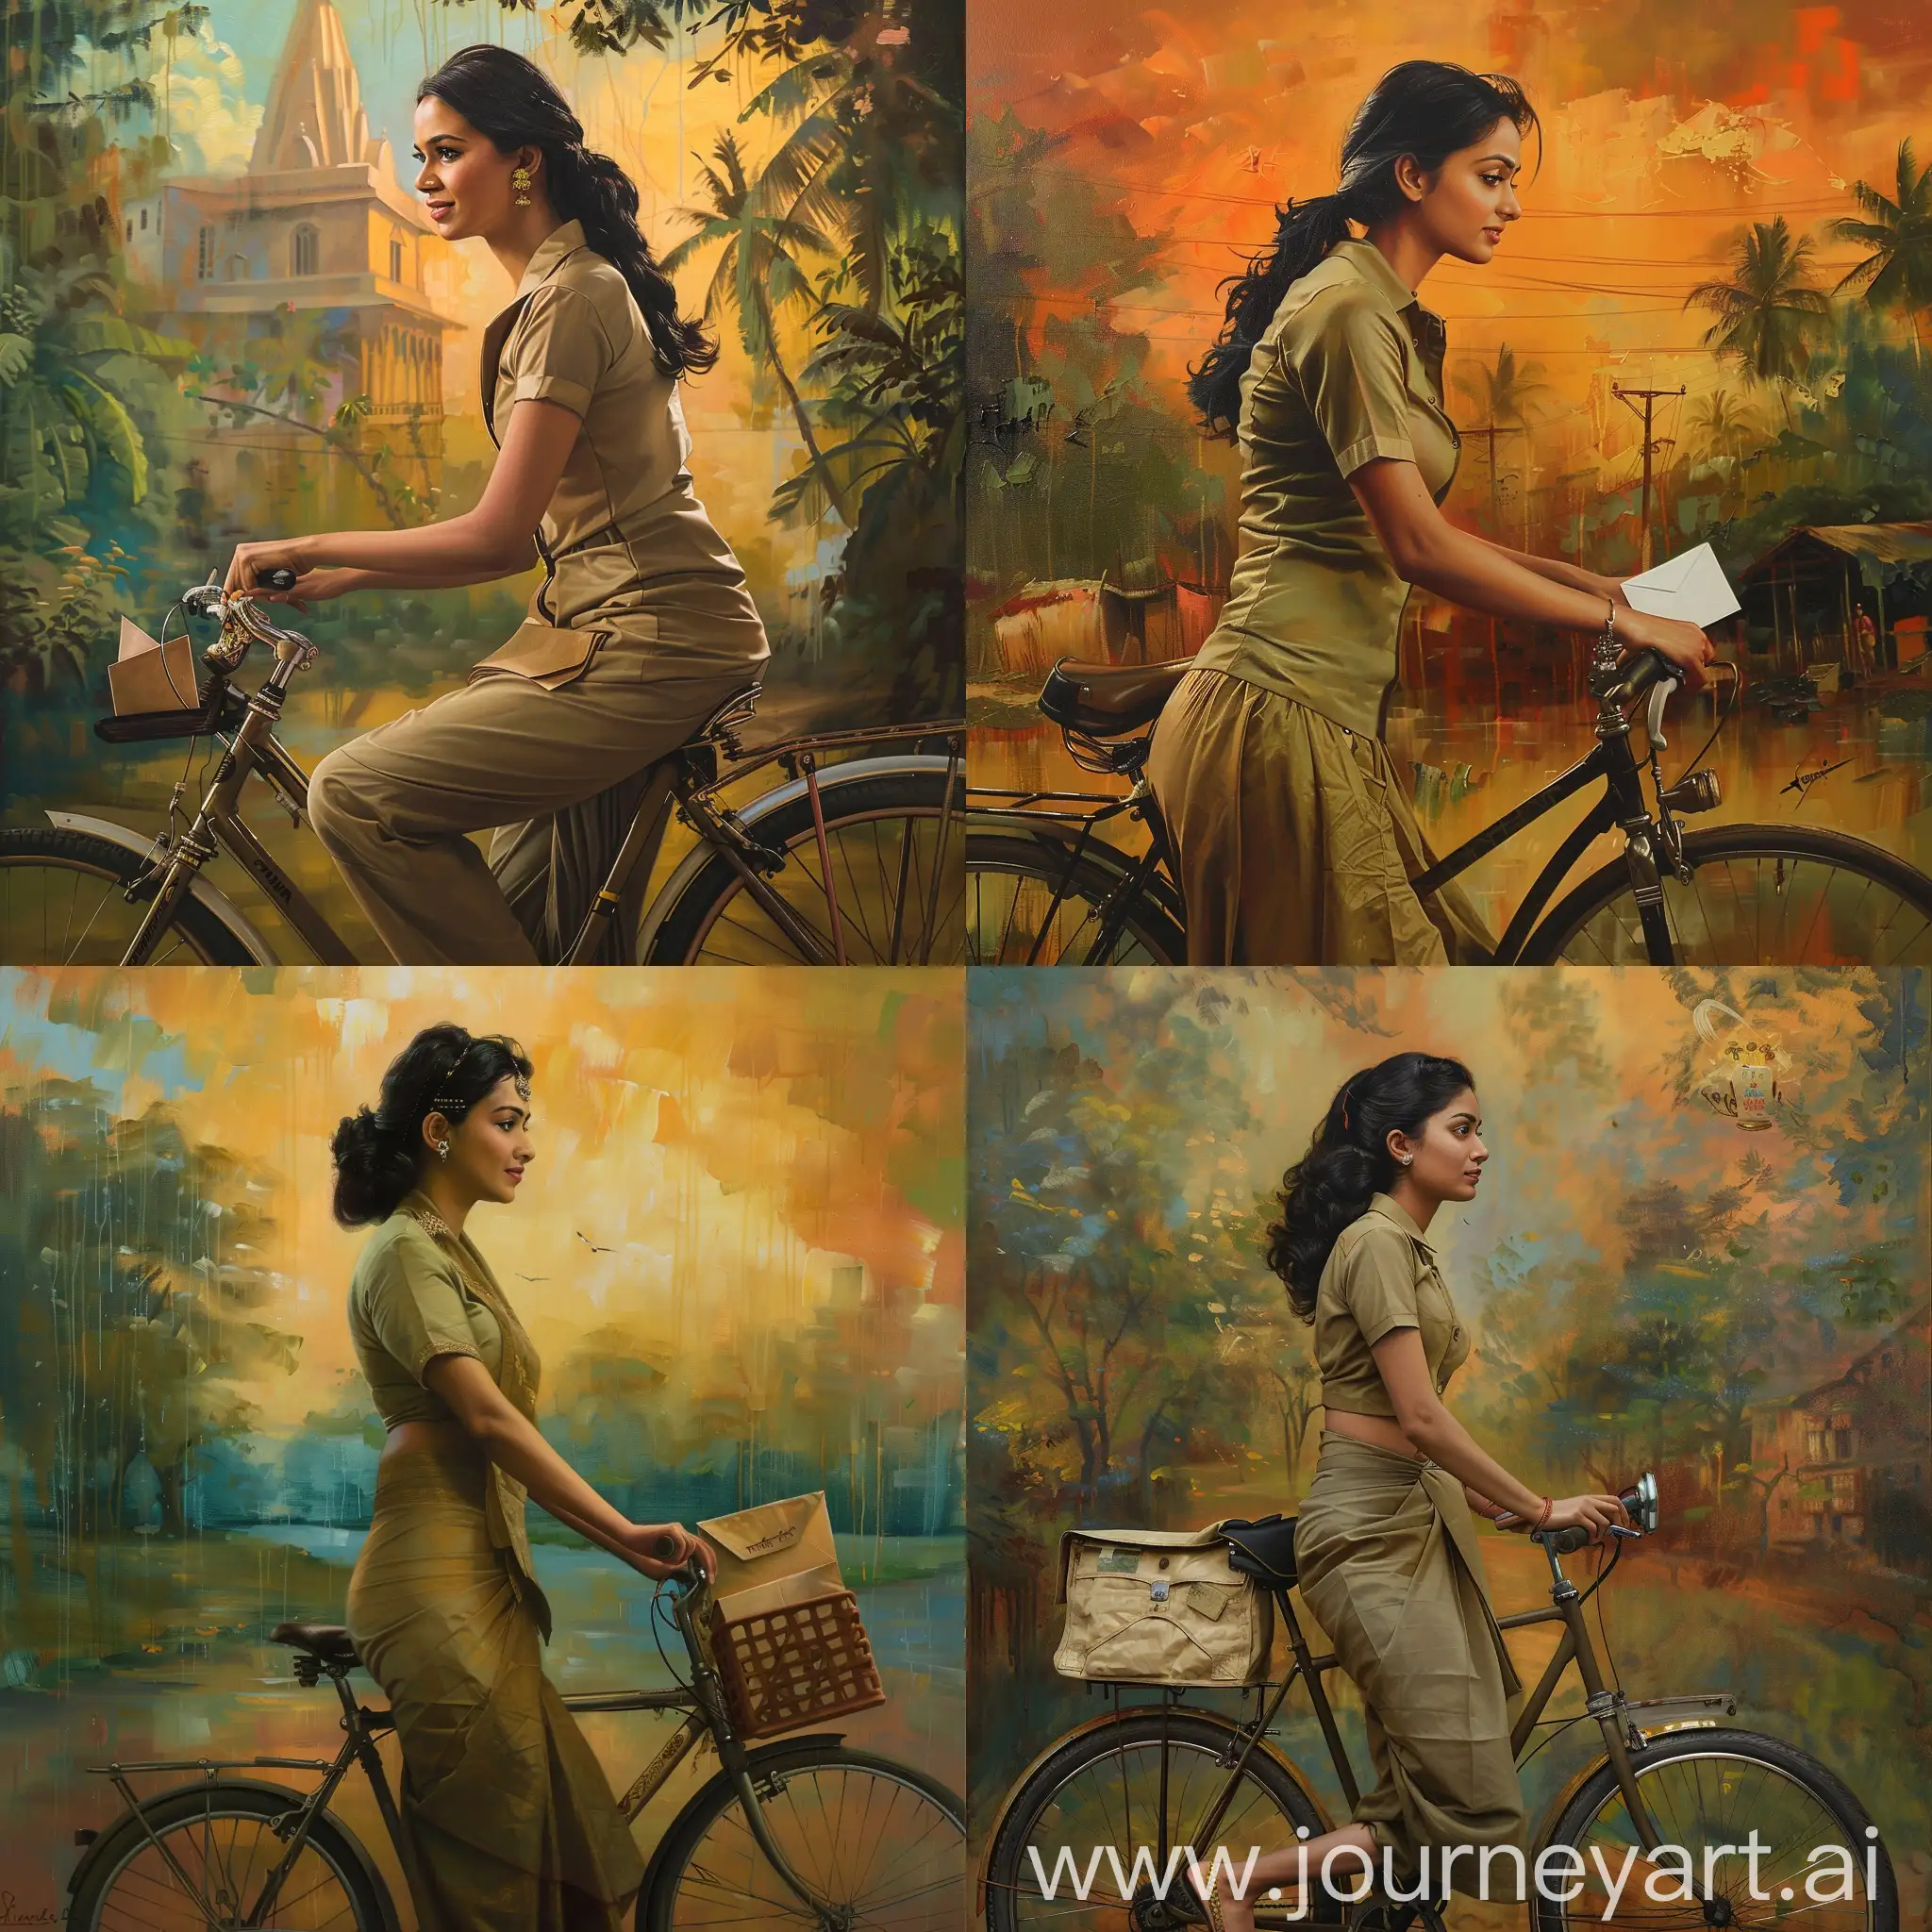 Elegant-Kerala-Postwoman-Delivering-Letters-on-Bicycle-in-Vivid-Rural-Setting